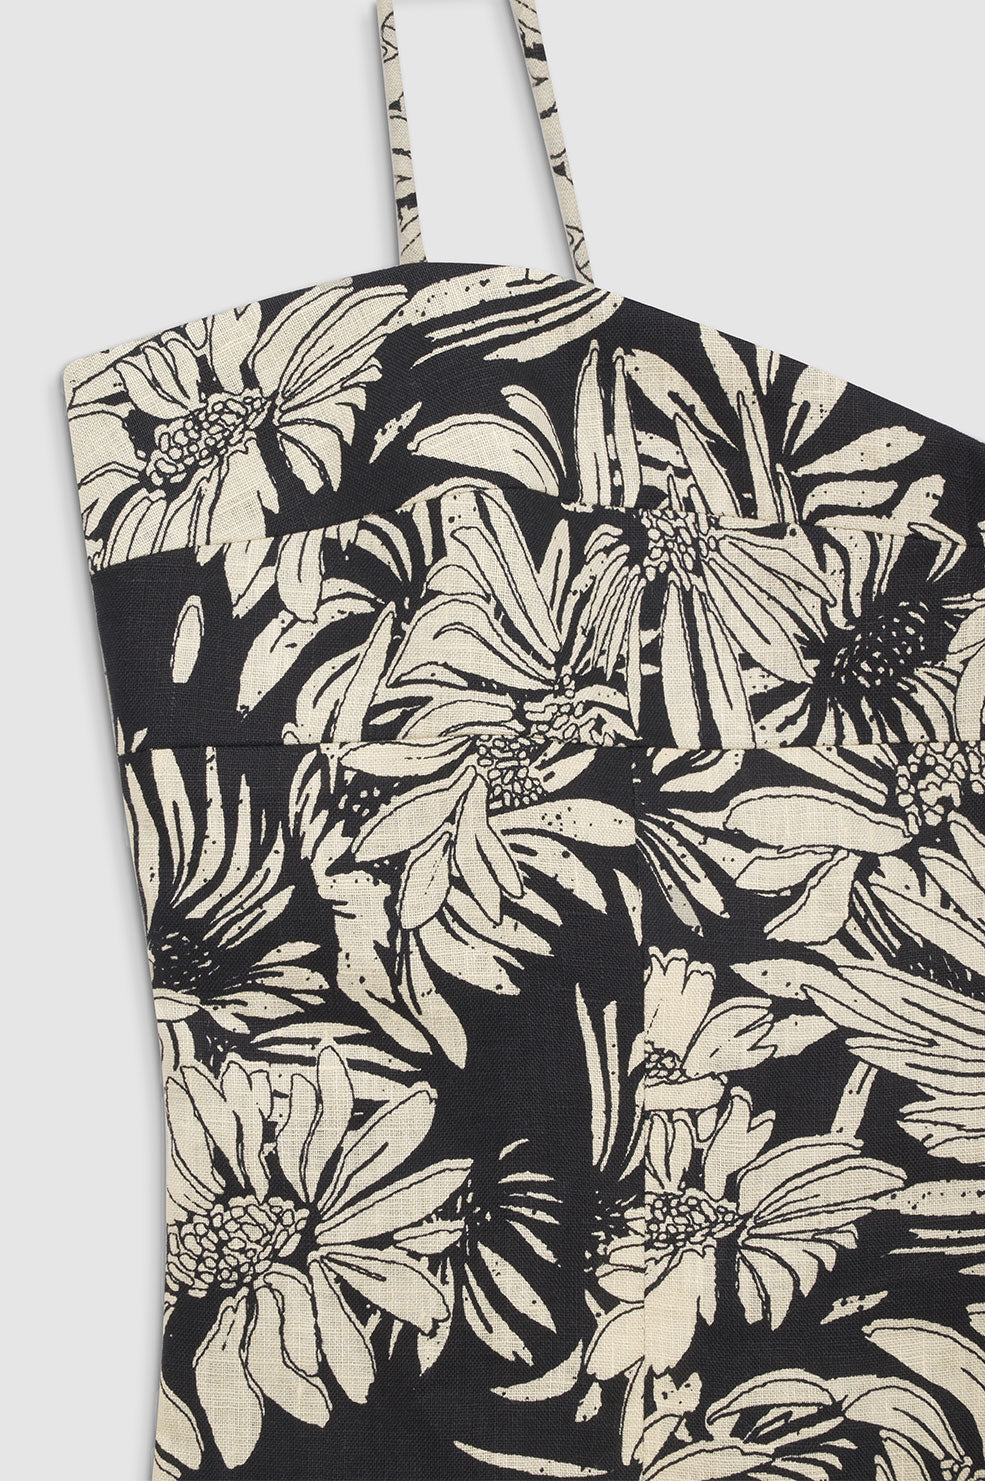 ANINE BING Keiran Top - Black Floral Print - Detail View